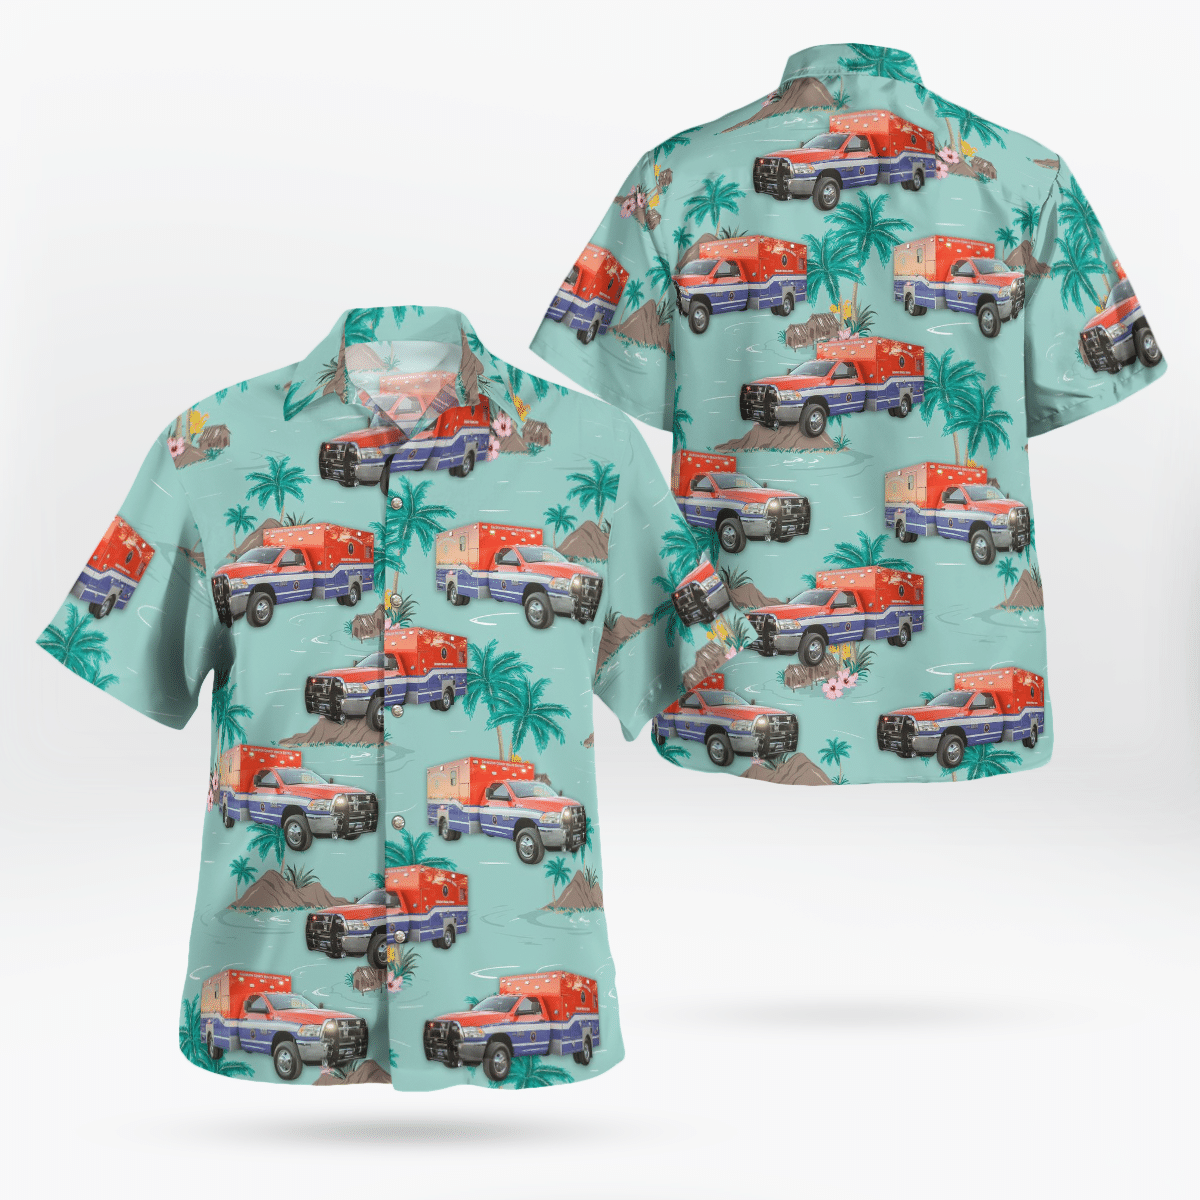 Why don't you order Hot Hawaiian Shirt today? 311